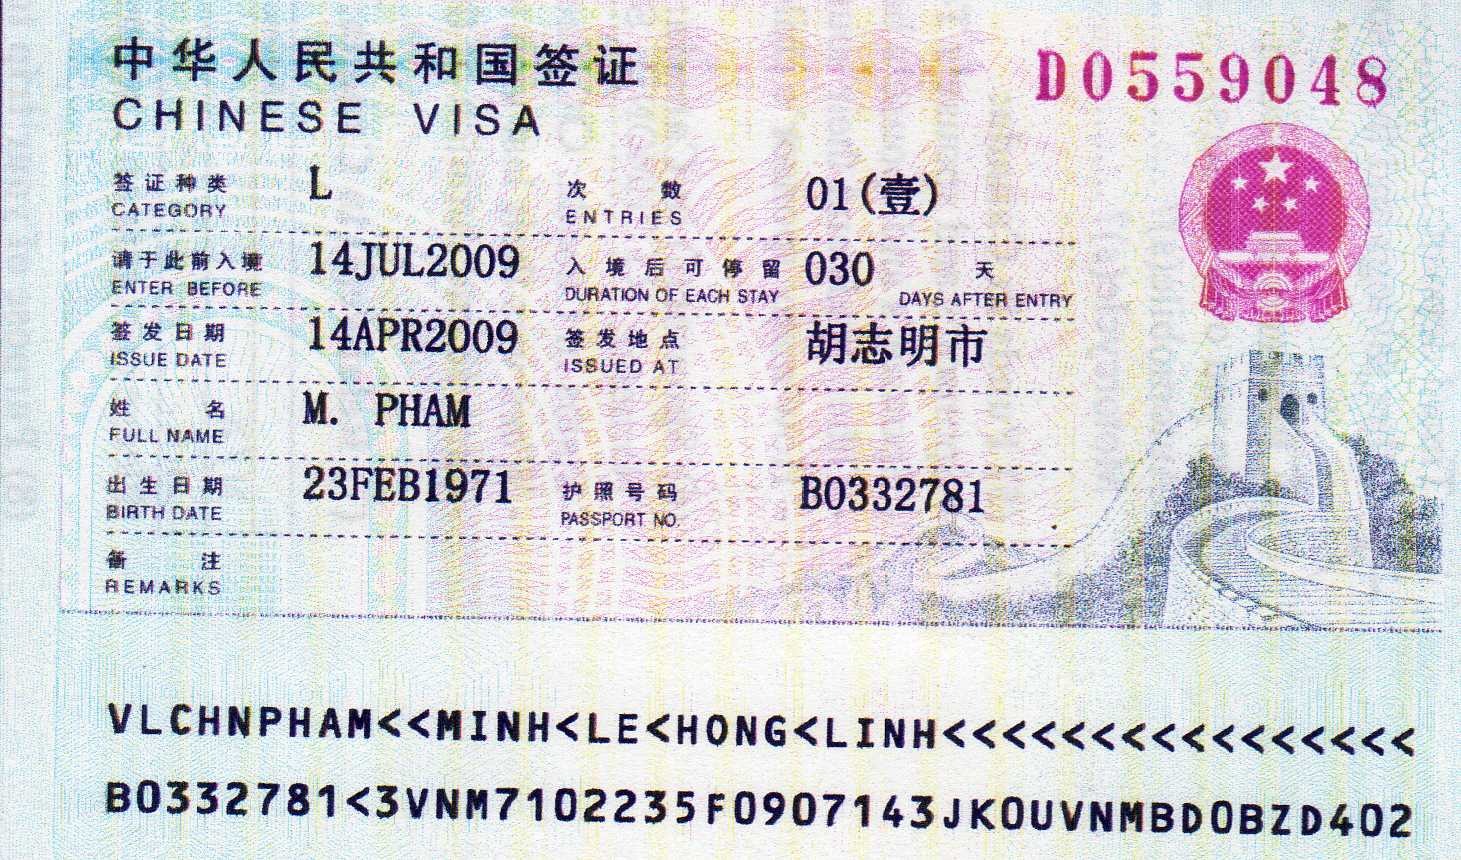 exit visas to countries